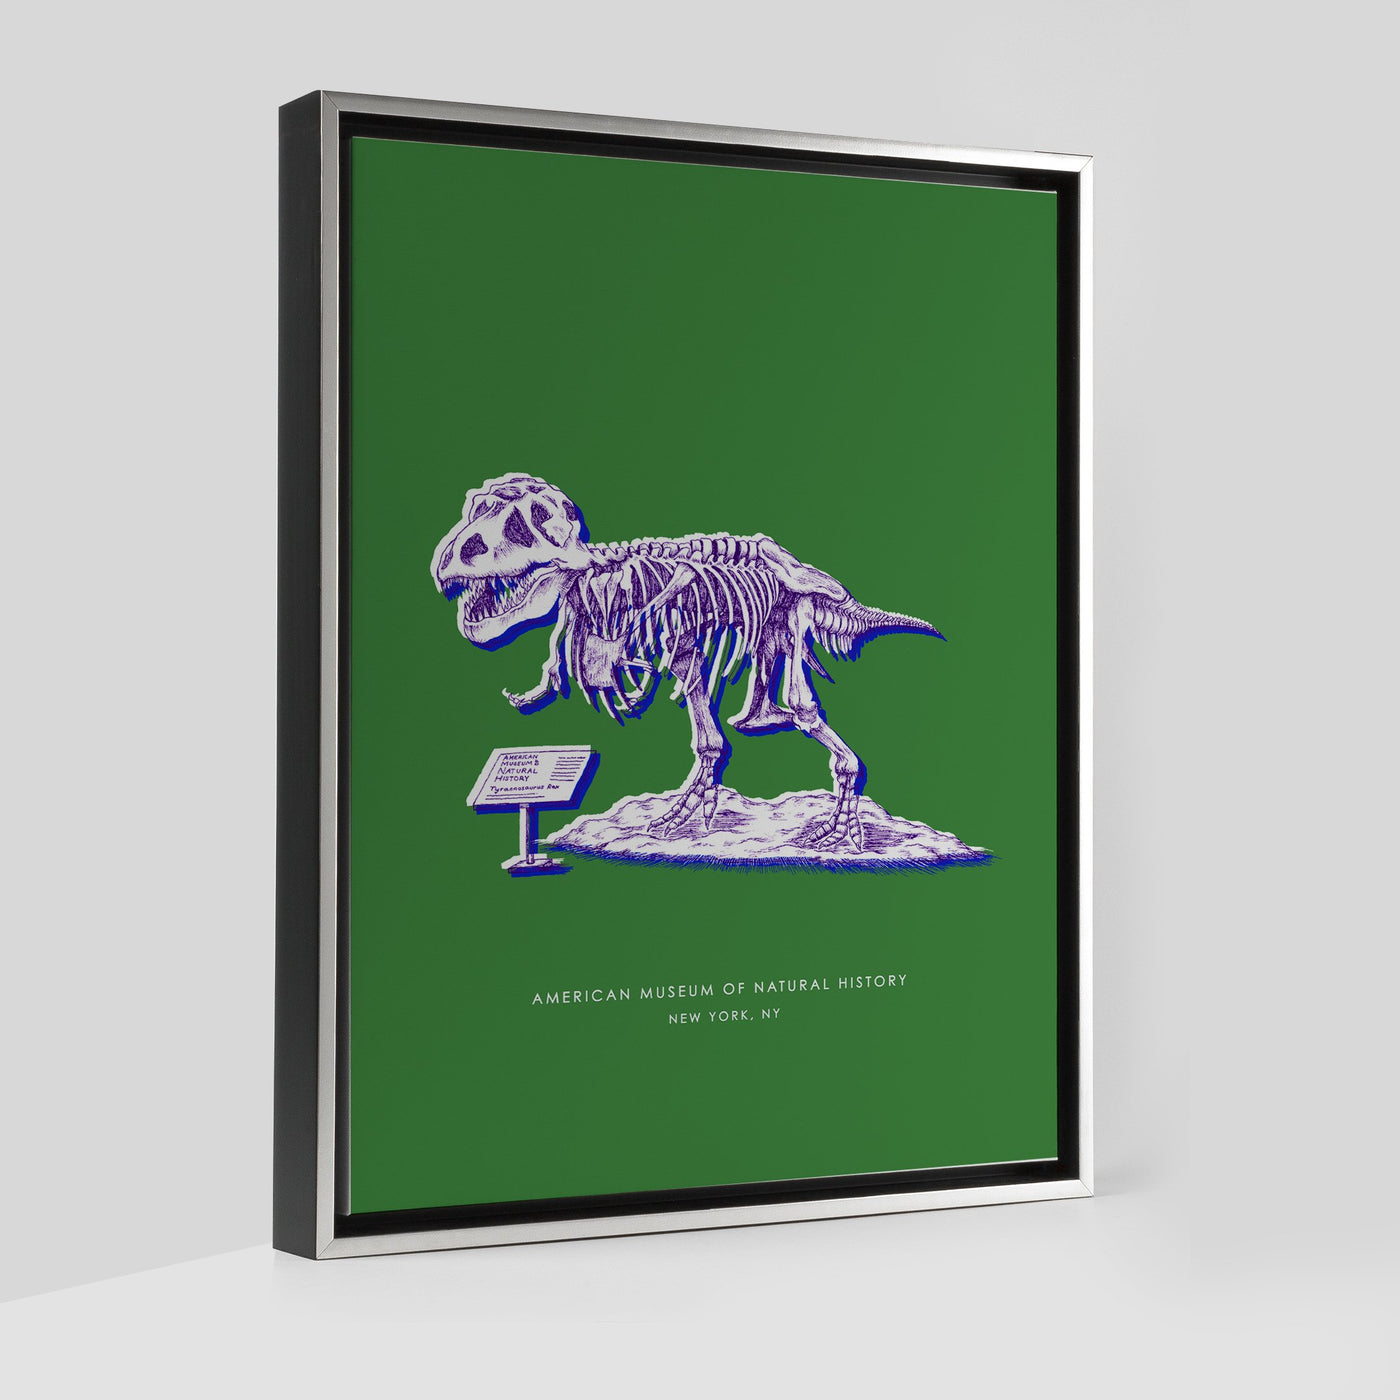 Gallery Prints Green Canvas / 8x10 / Silver New York Dinosaur Print Katie Kime